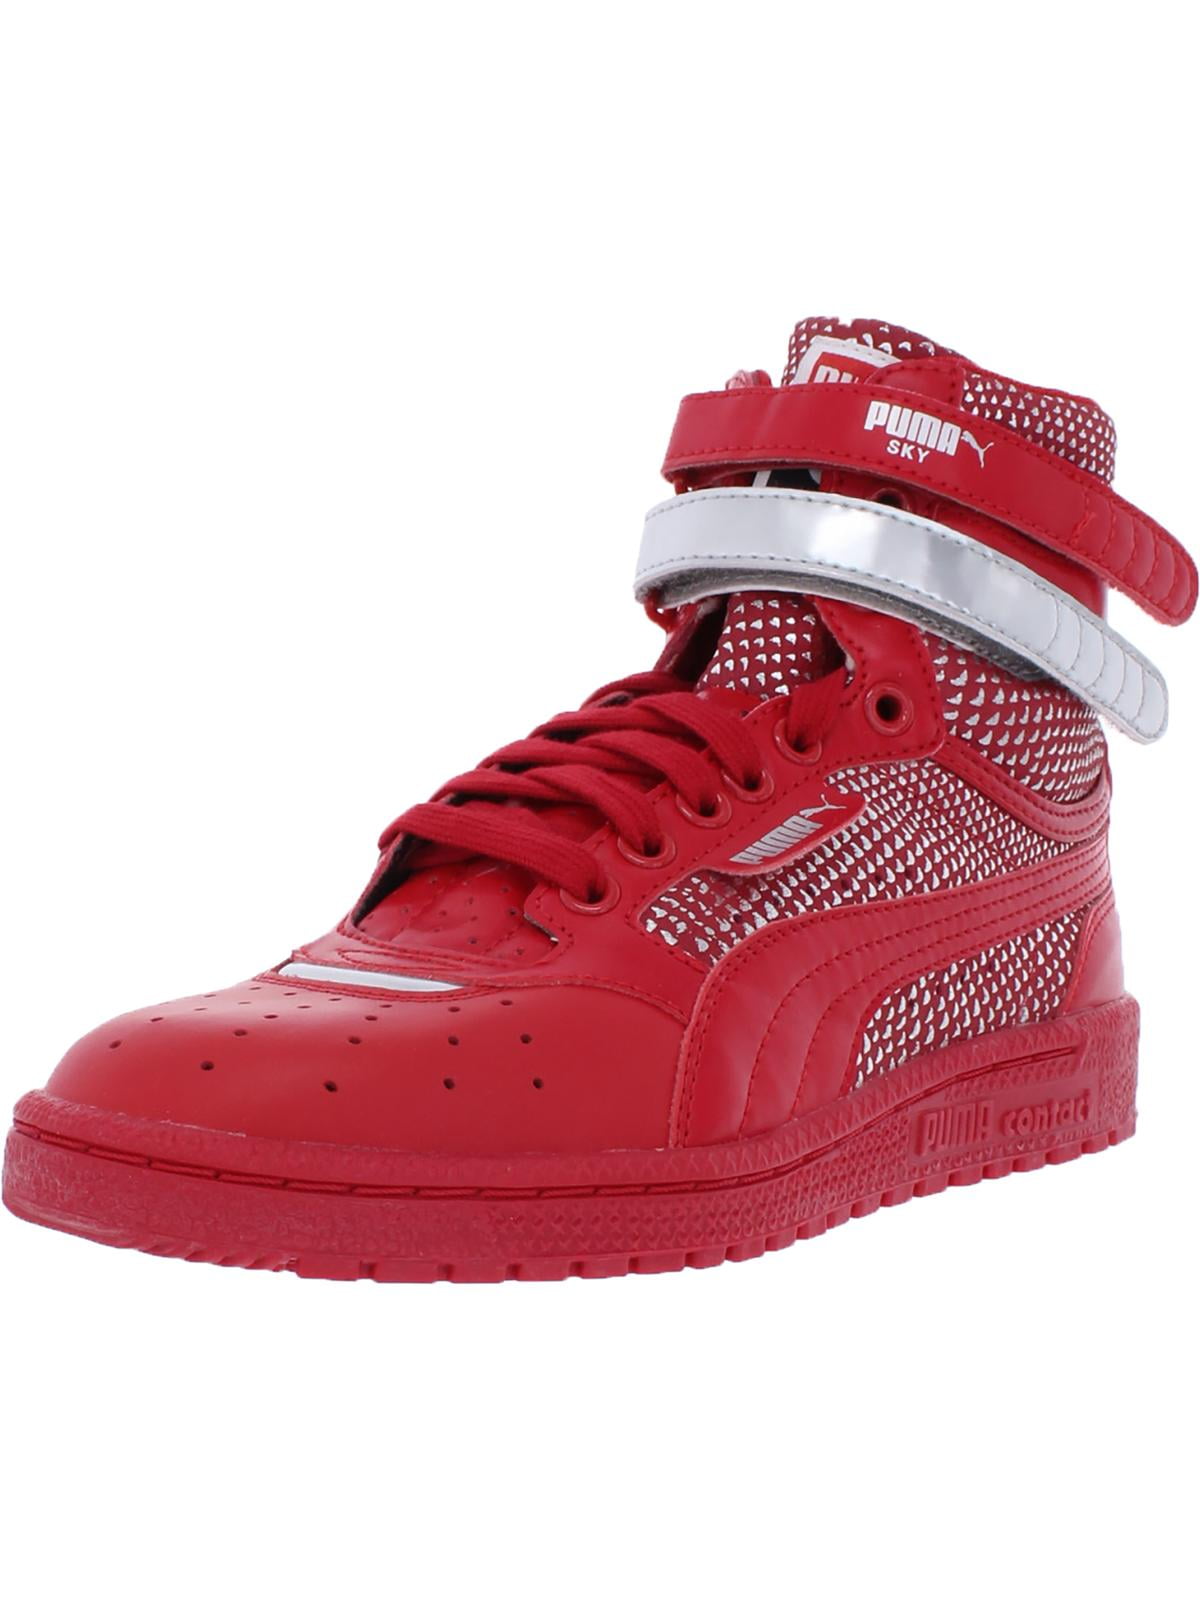 Puma Sky II Hi Reset - ShopStyle Sneakers & Athletic Shoes | Sneakers  fashion, Sneakers, Hightop sneakers